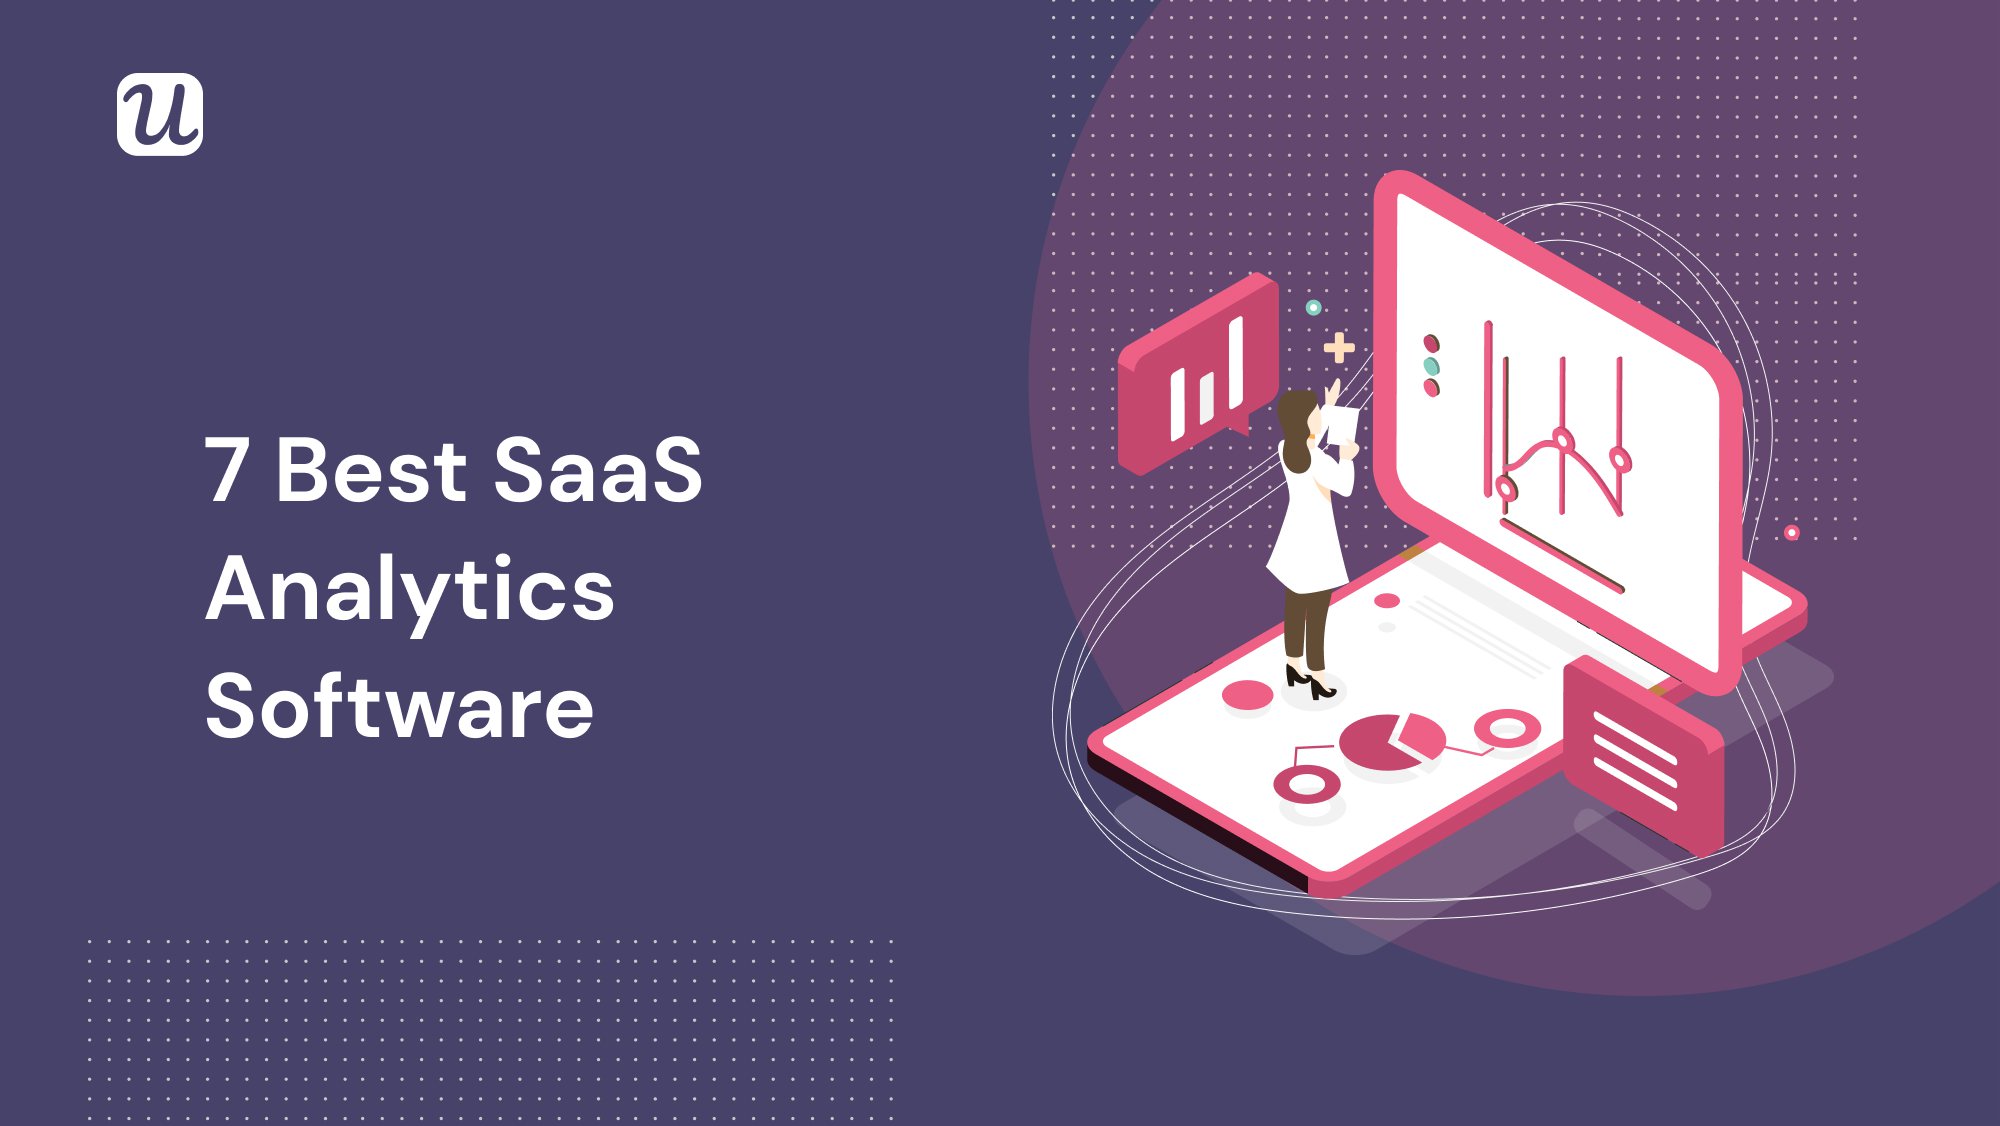 The 7 Best SaaS Analytics Software of 2021